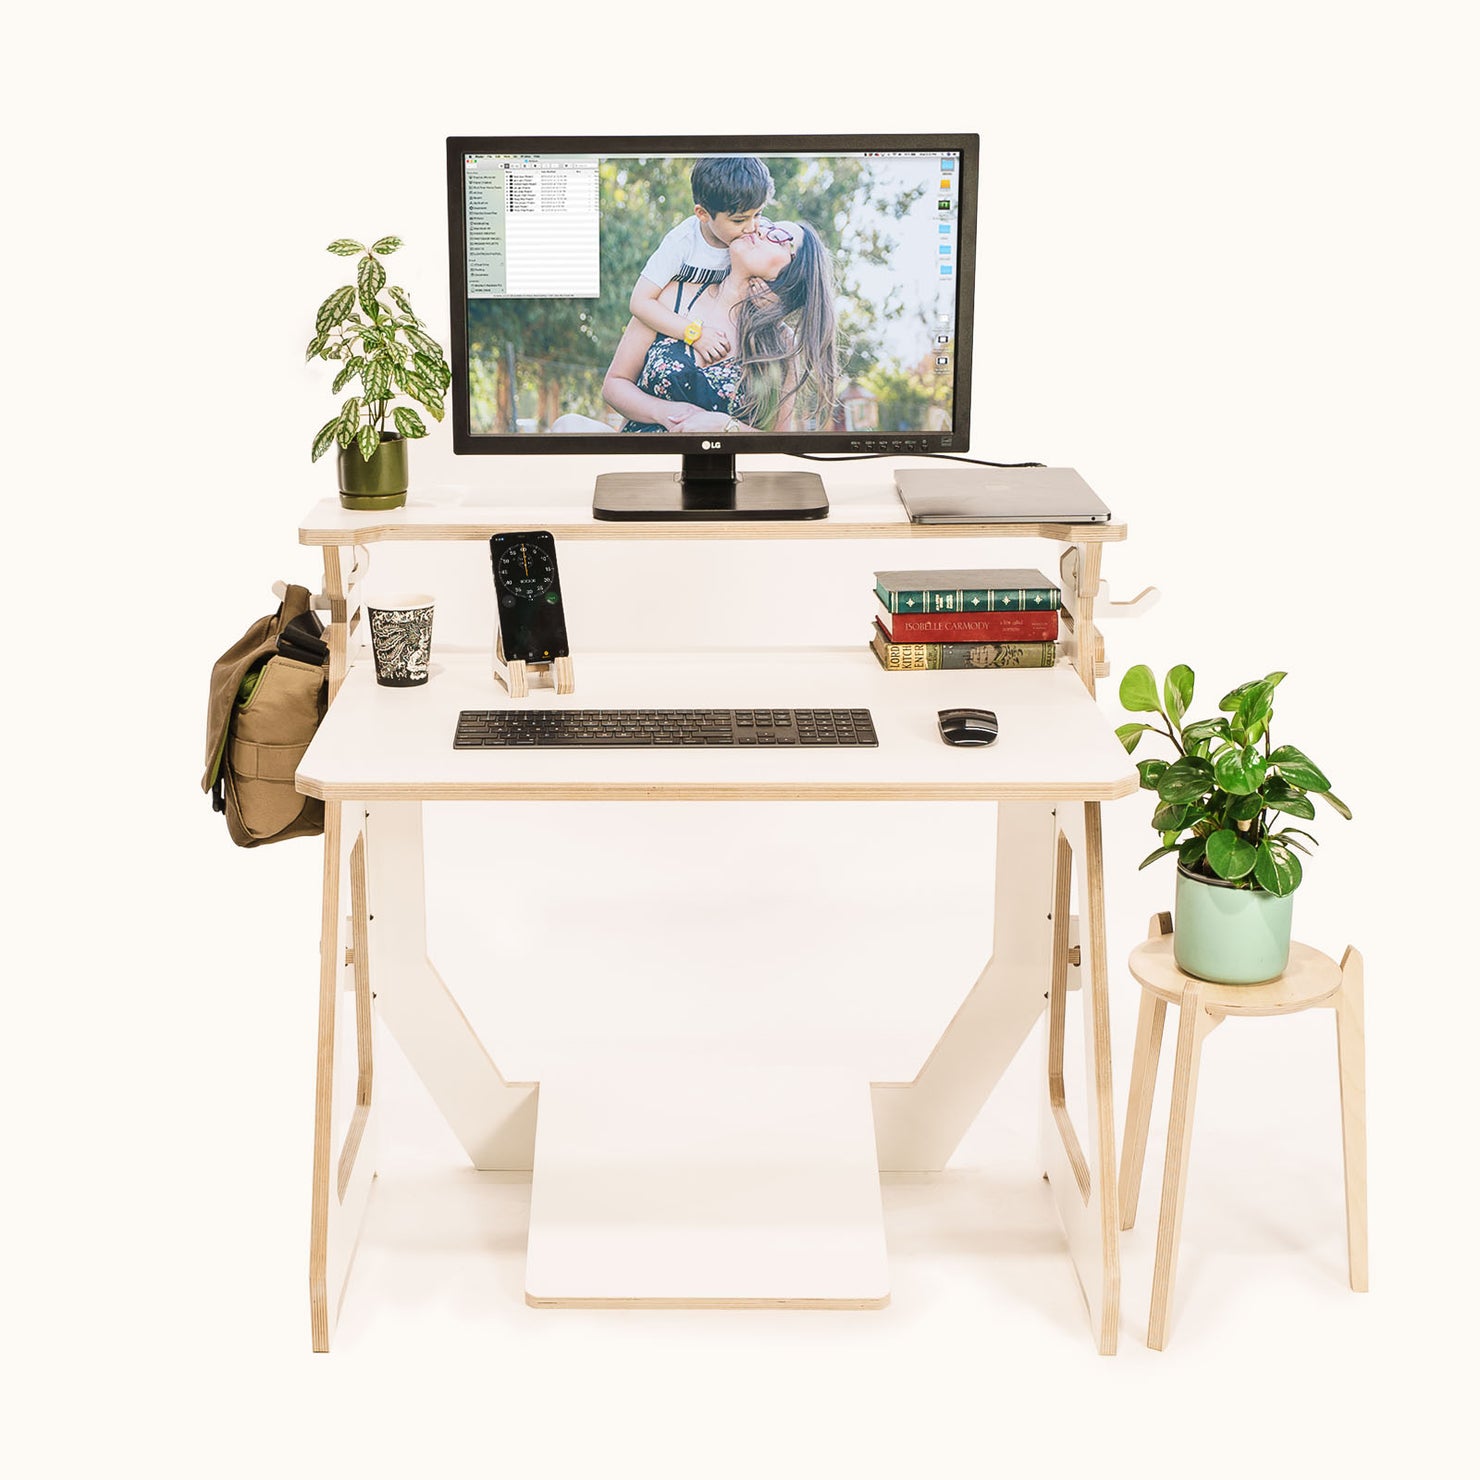 Sitting Desk With Footrest, Home Office Desk